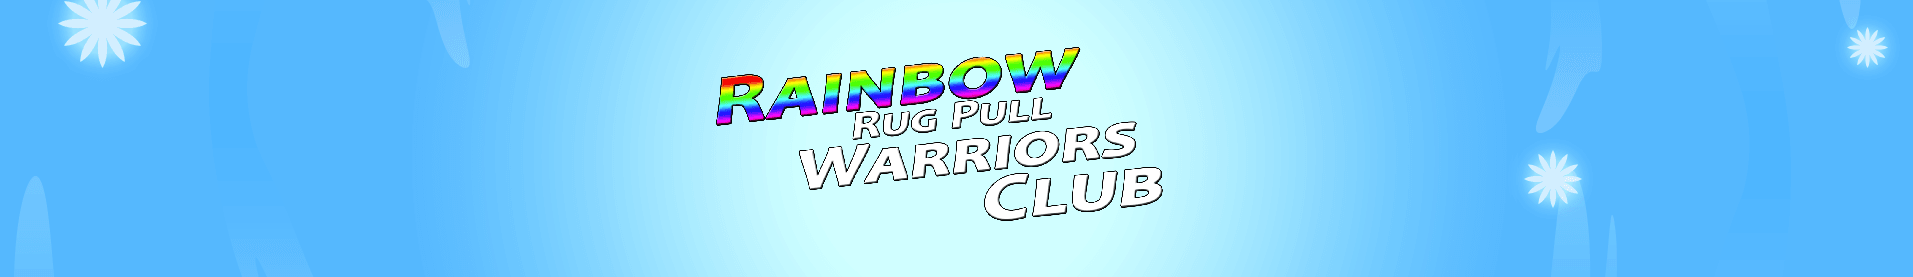 Rainbow_Rug_Pull_Warriors_Club 橫幅